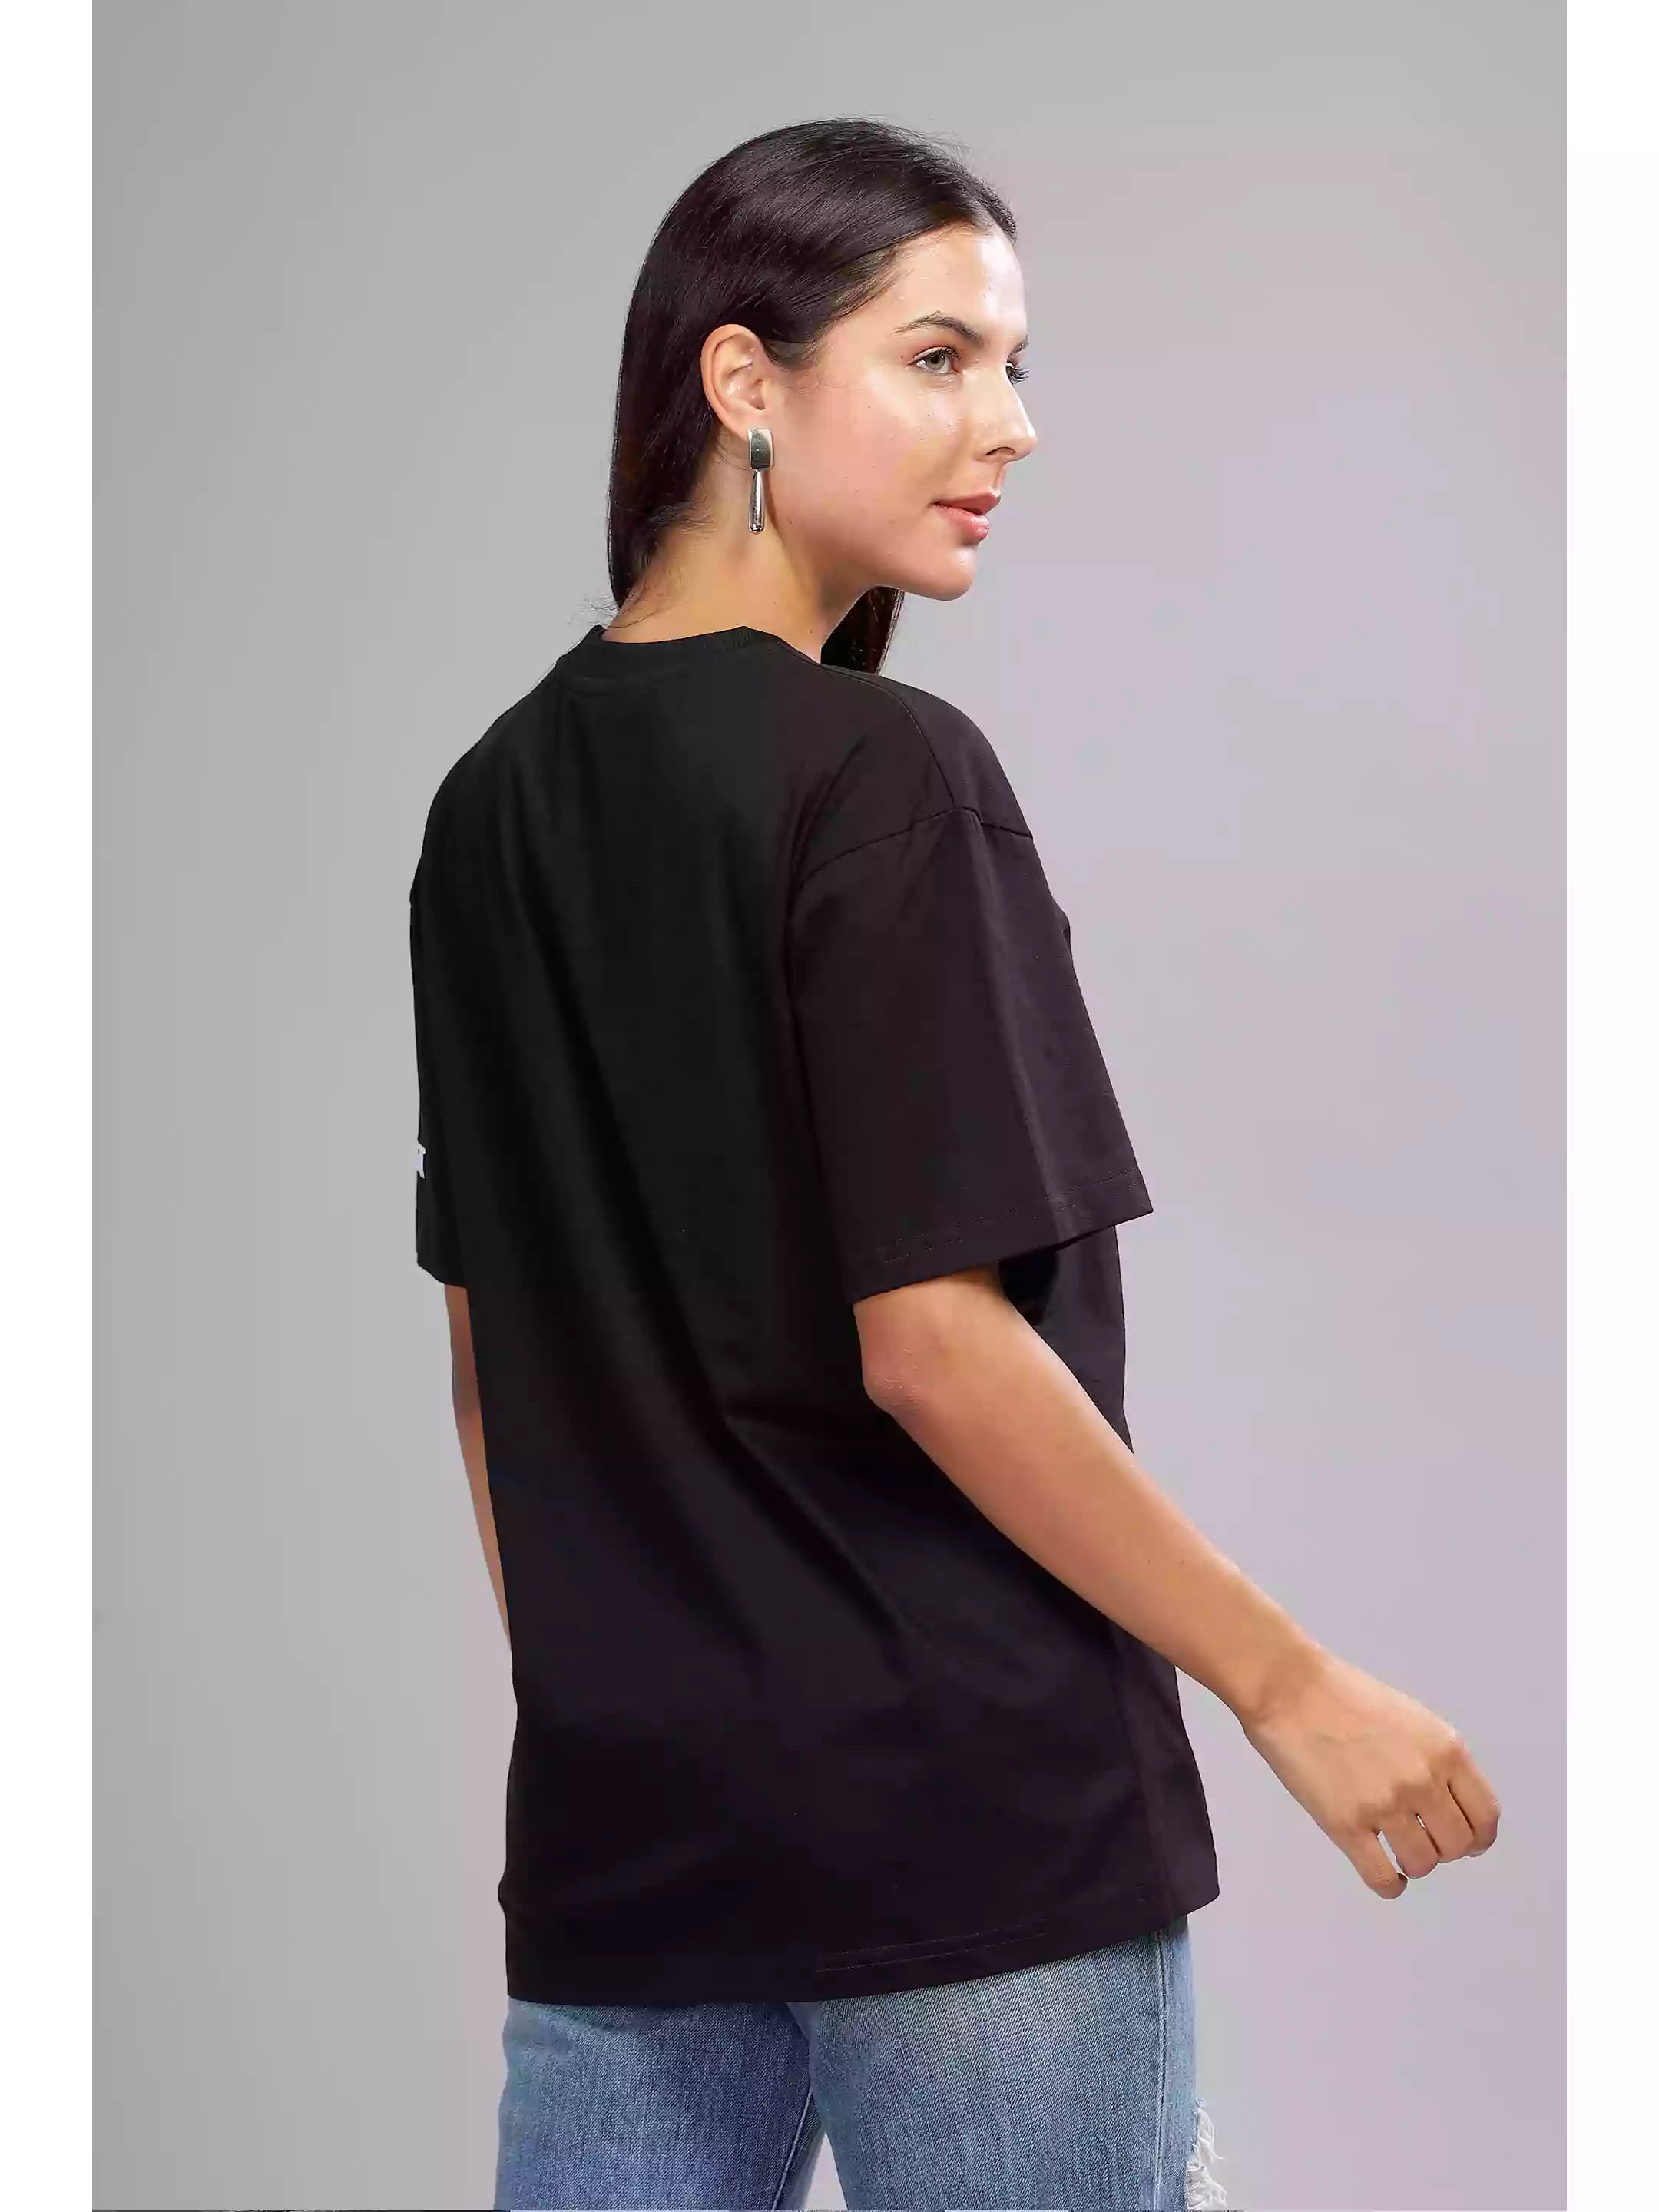 Find your NIRVANA - Sukhiaatma Unisex Oversize Black T-shirt